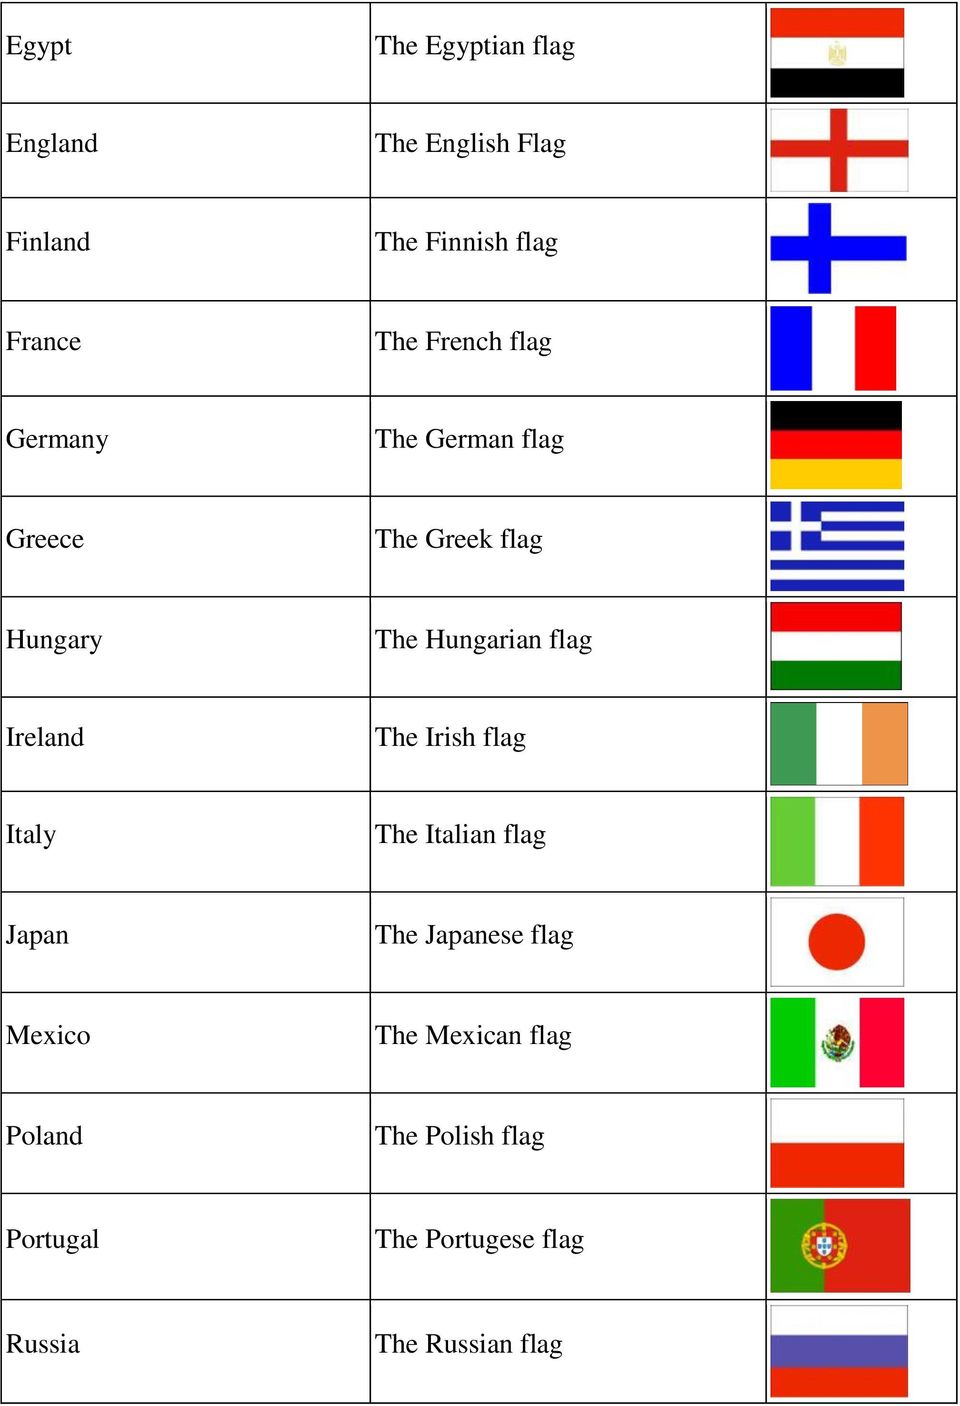 Ireland The Irish flag Italy The Italian flag Japan The Japanese flag Mexico The